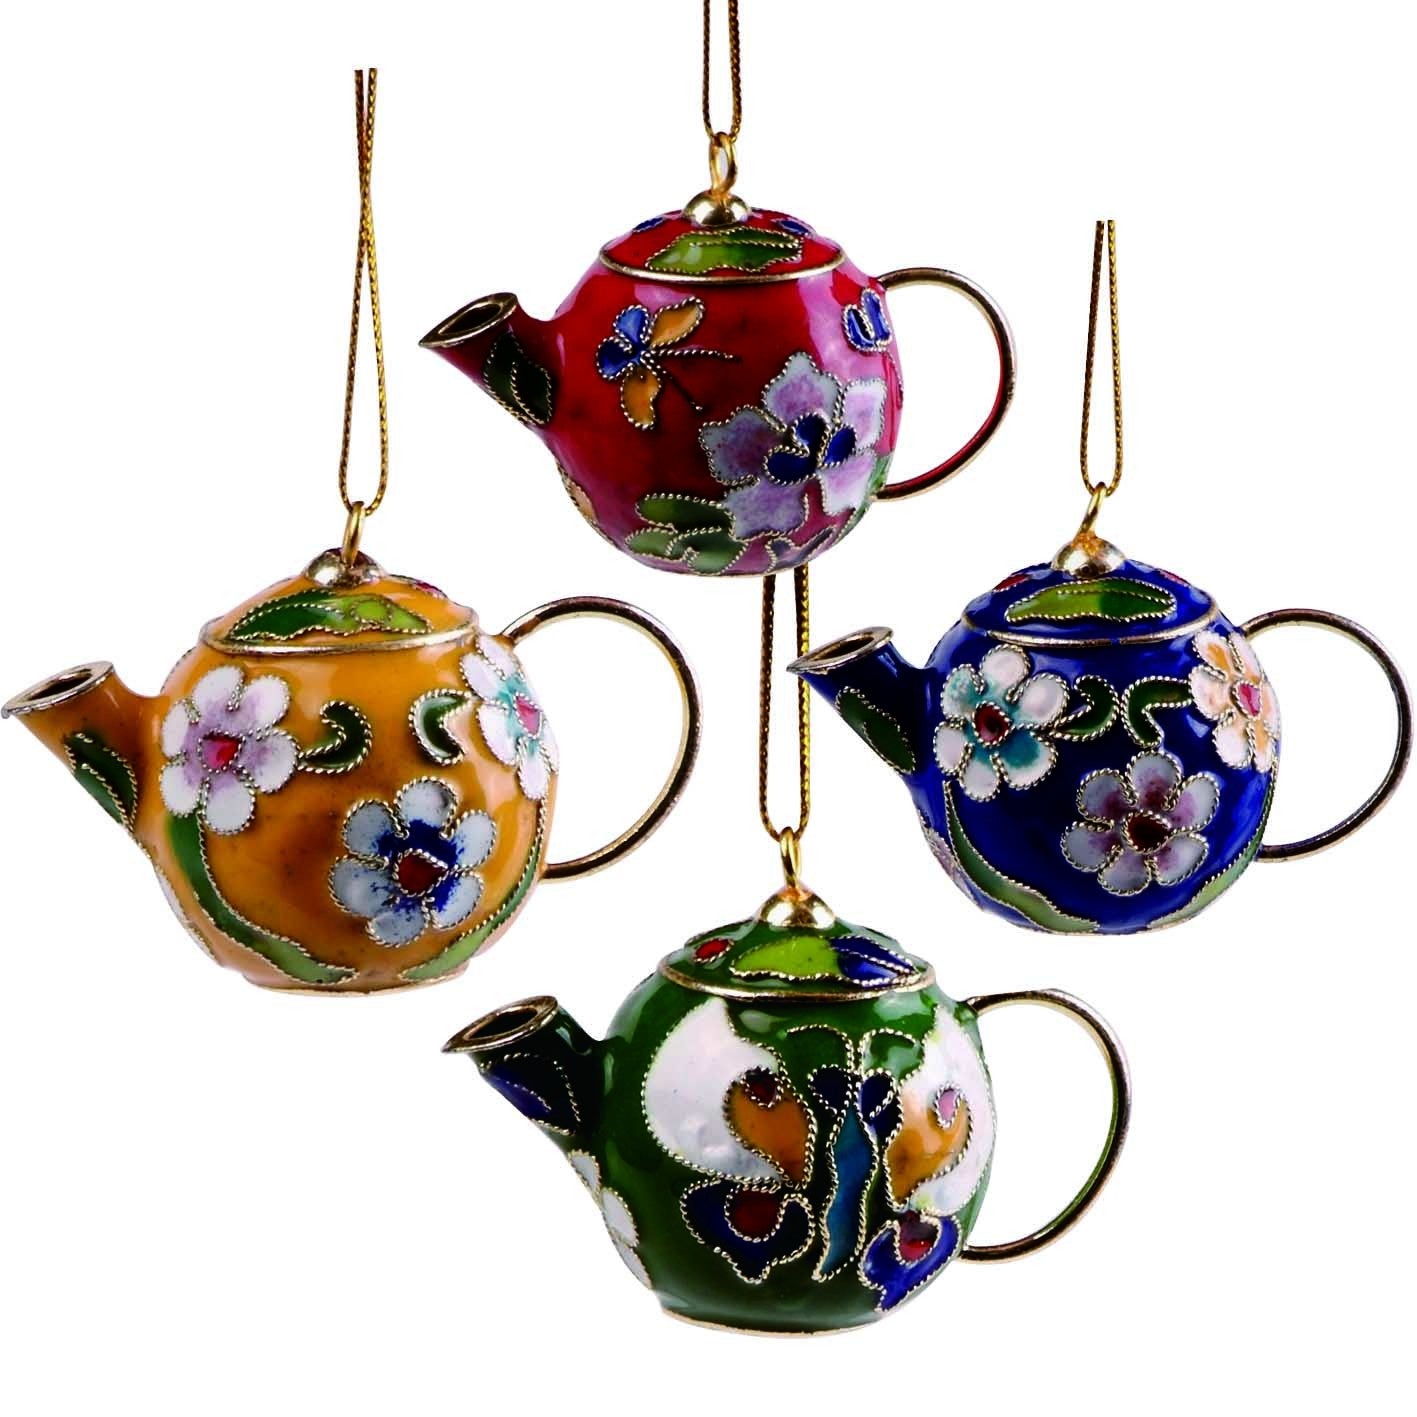 Cloisonne Ornament - Tea Pots - Set of 4 - Original Source